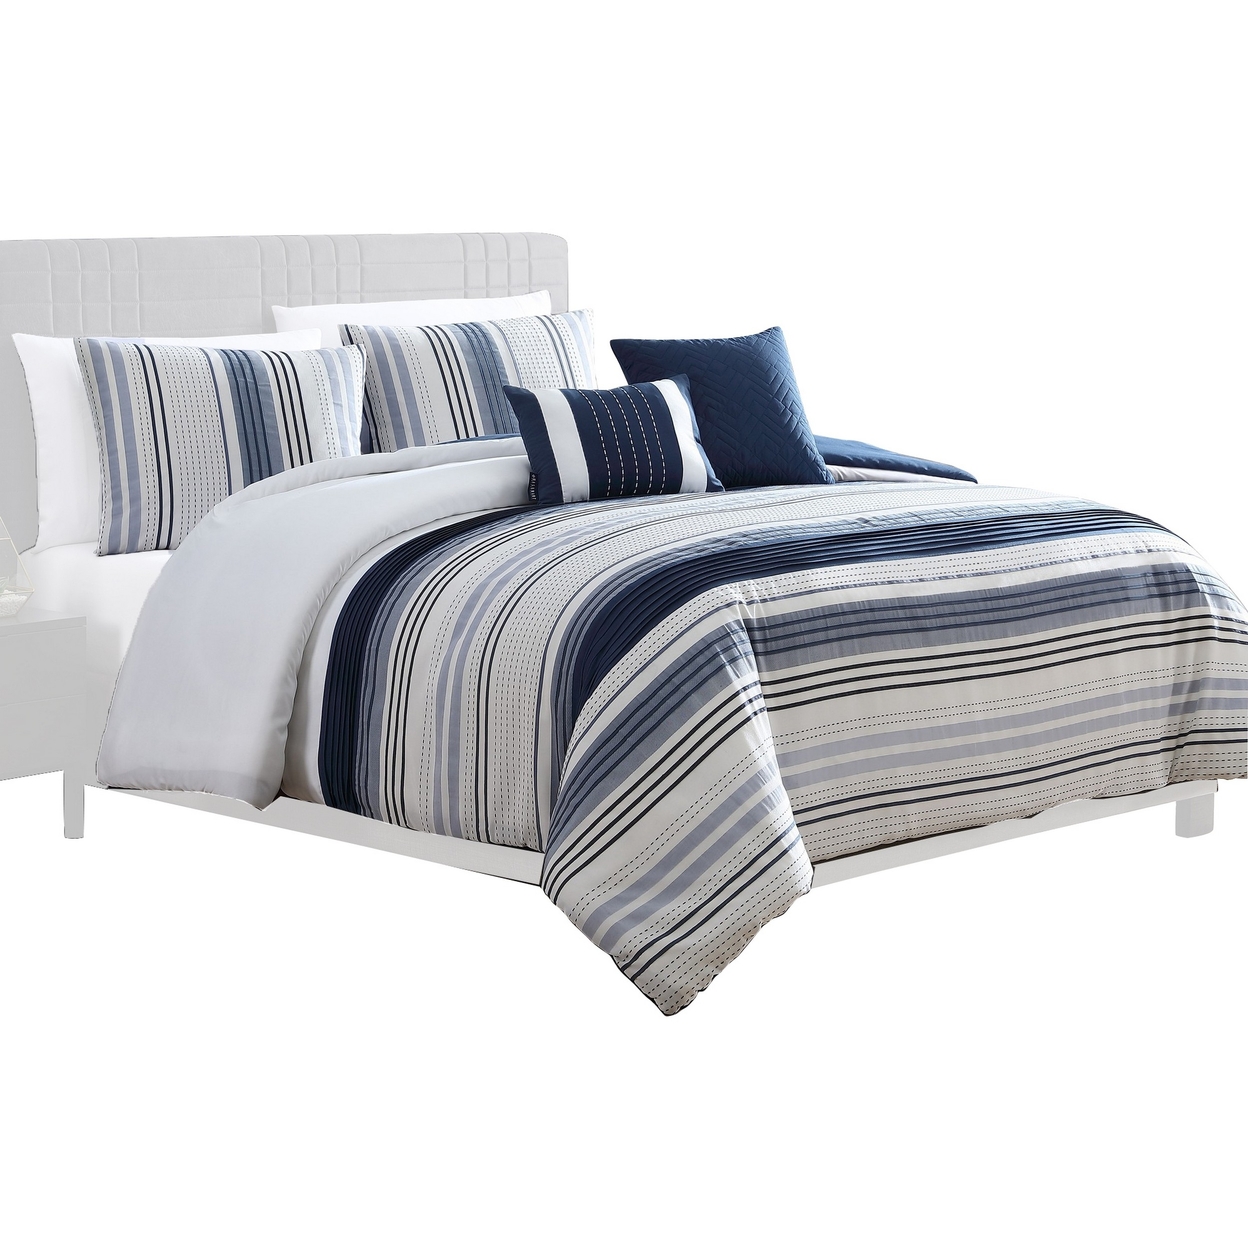 Alfa 5 Piece King Comforter Set, Jacquard Woven Stripes, Blue, White - Saltoro Sherpi